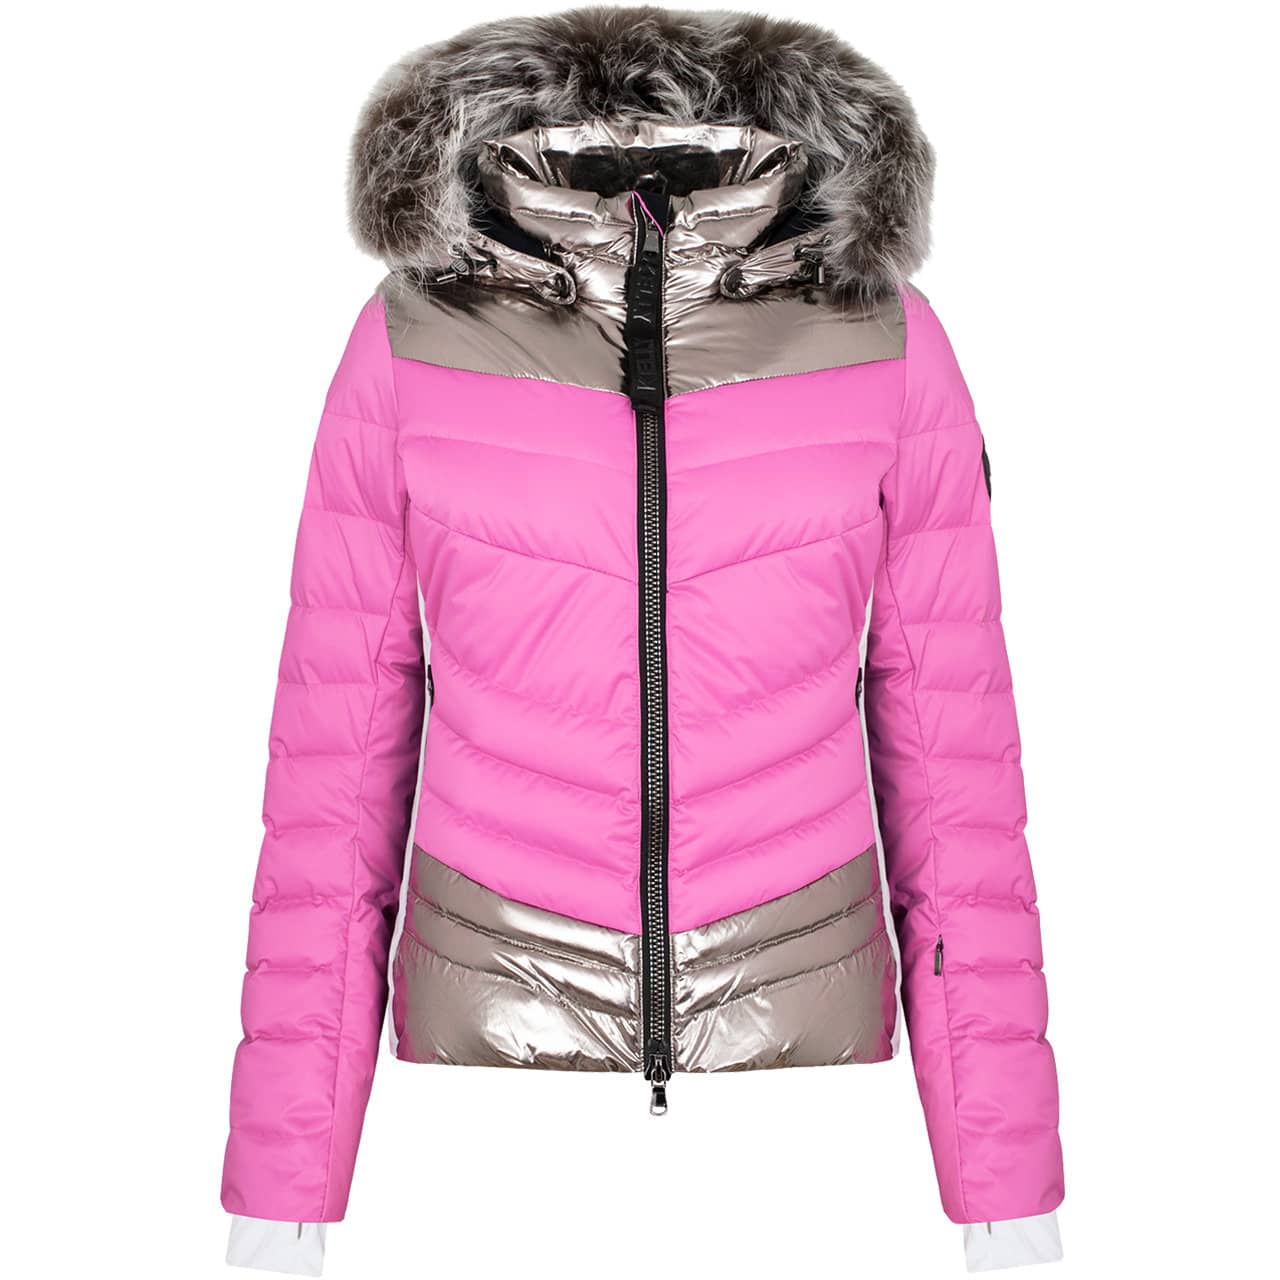 Kelly Women Down Jacket COSIMA FUR pink/stone |Kelly Ski Wear | High ...